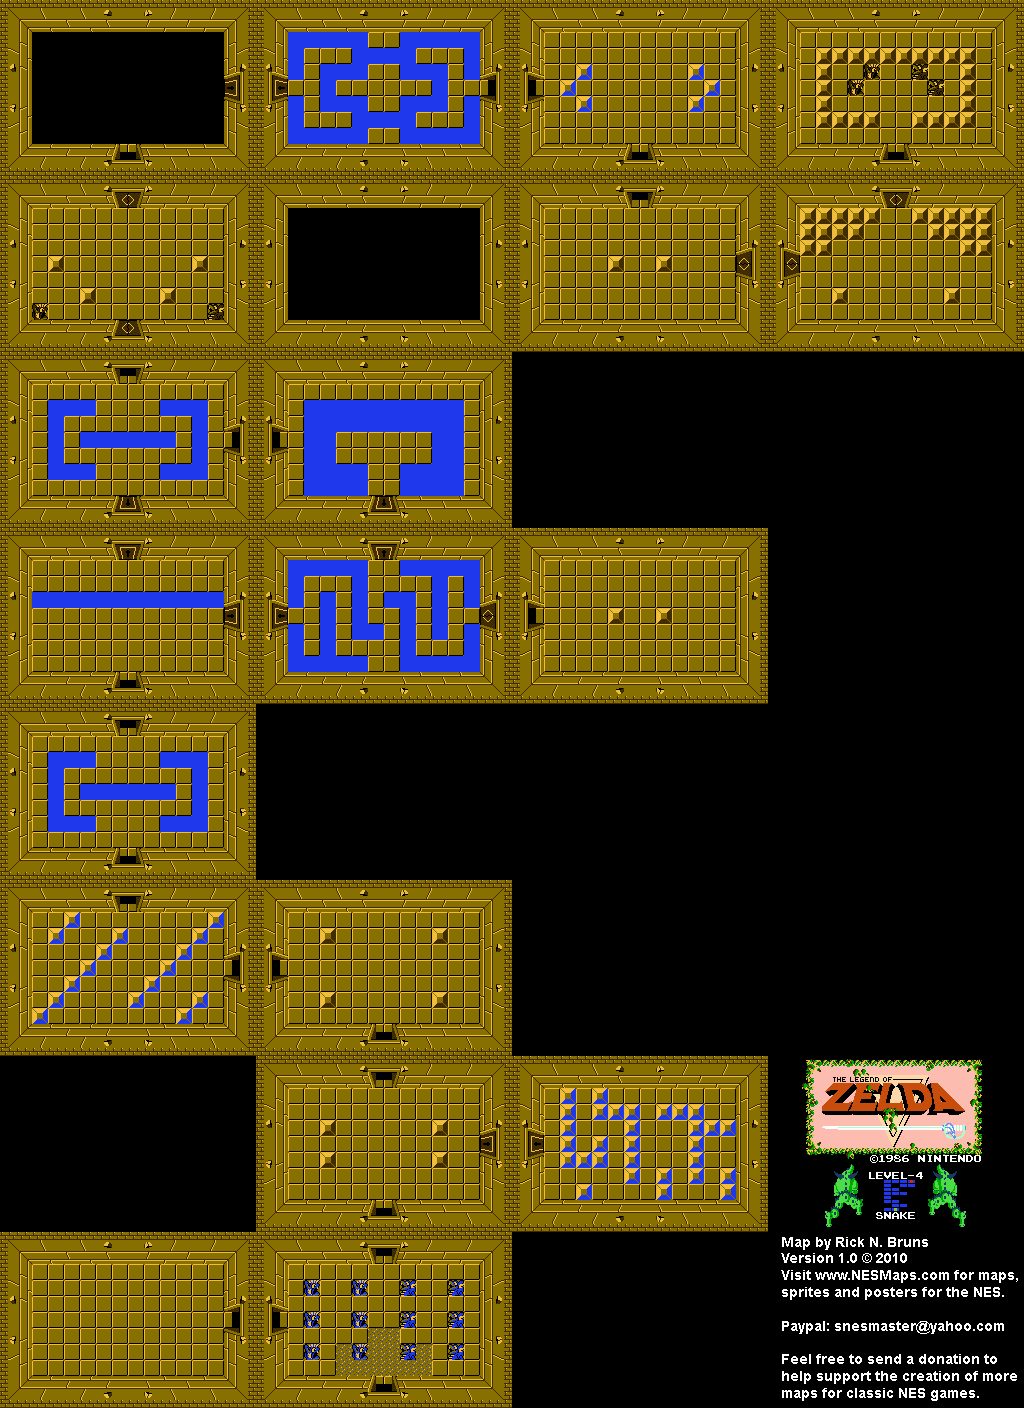 The Legend of Zelda - Level 4 Snake (Quest 1) Background Only Map. 